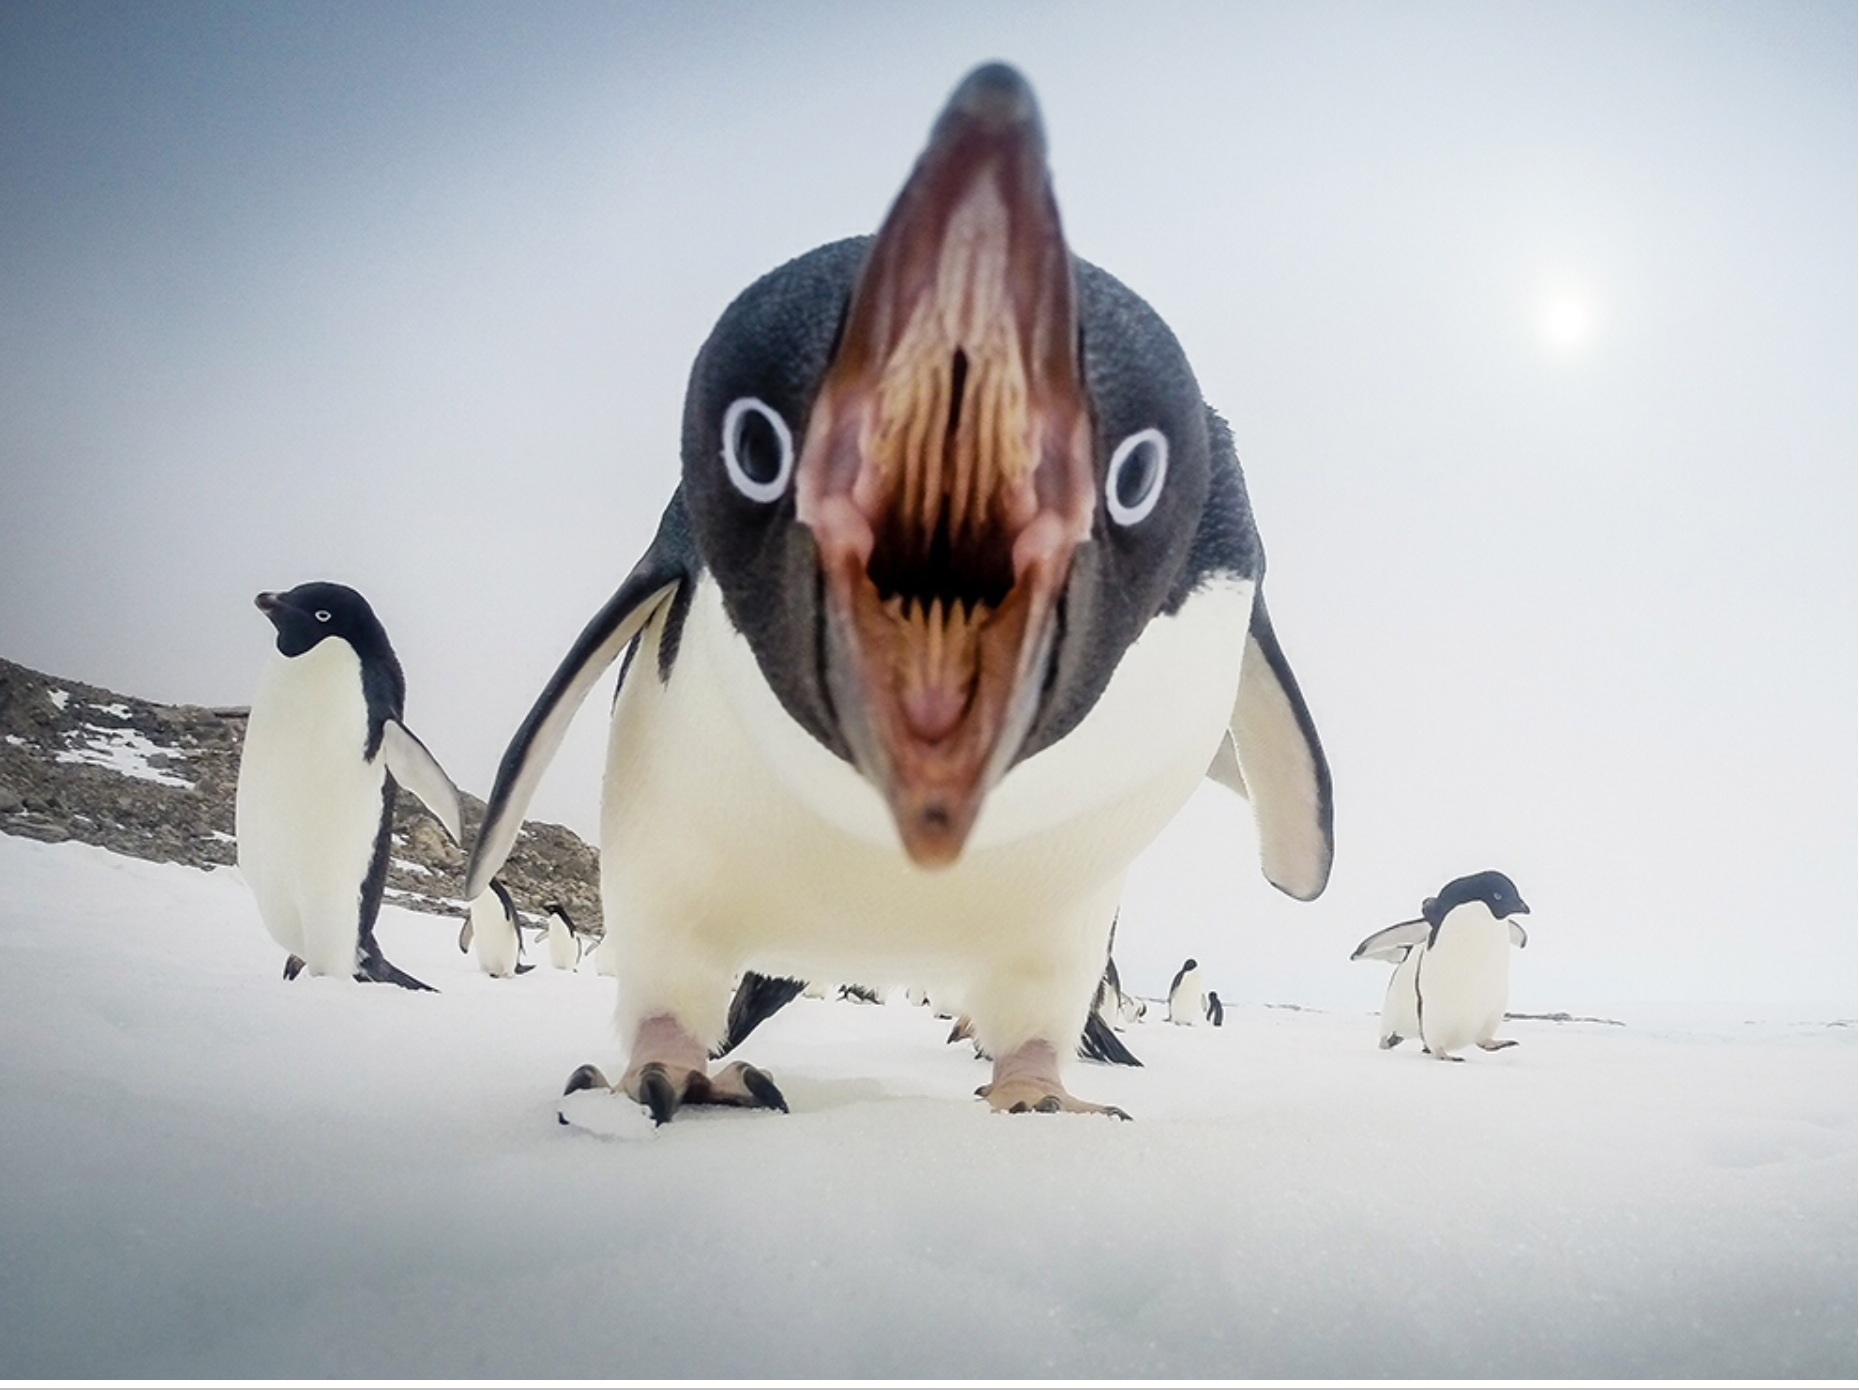 Pingvinets näbb